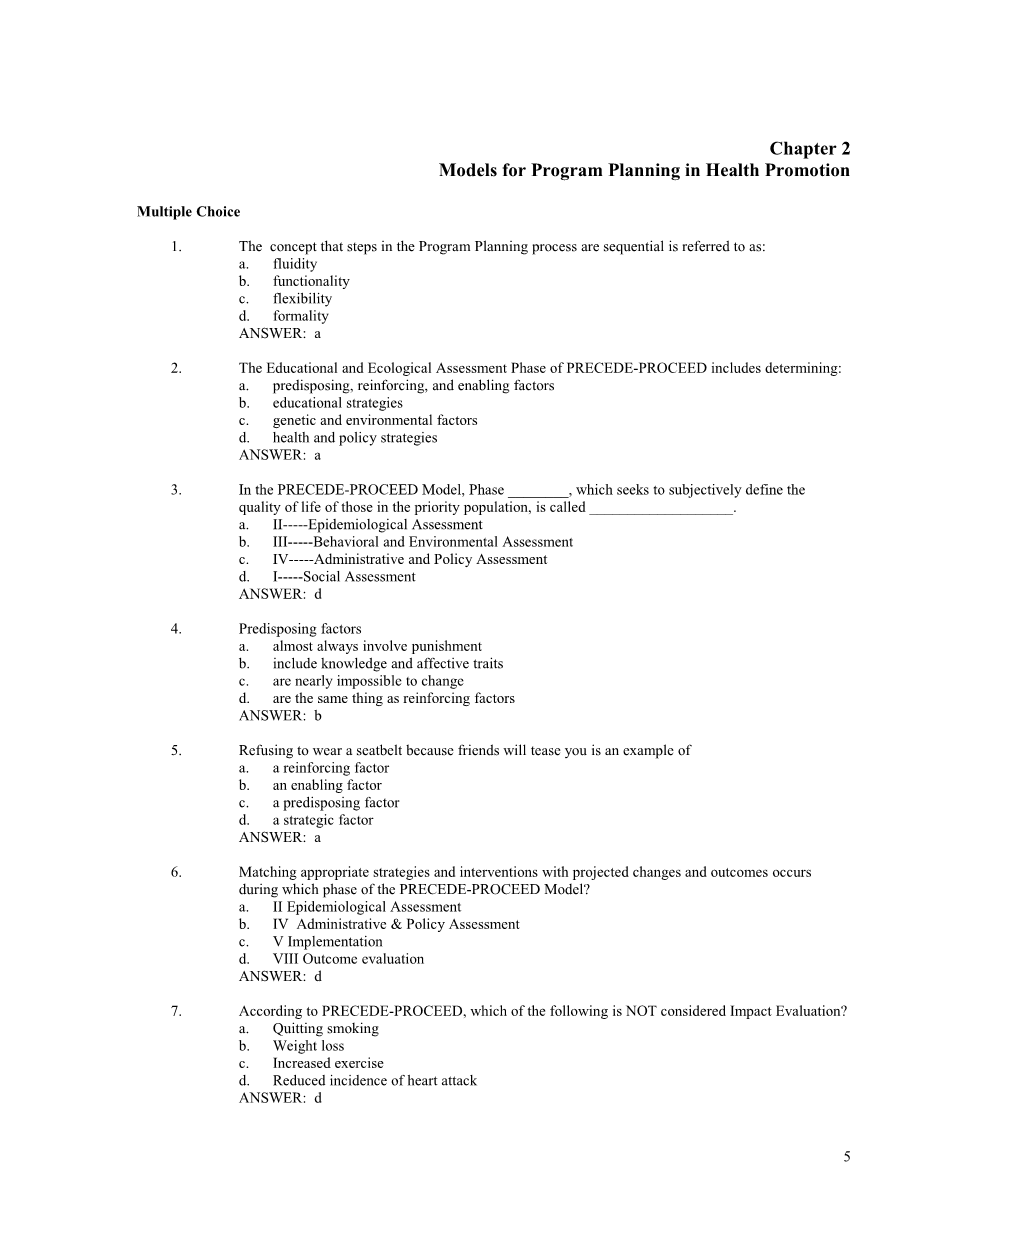 Chapter 2: Models for Program Planning in Health Promotion 1